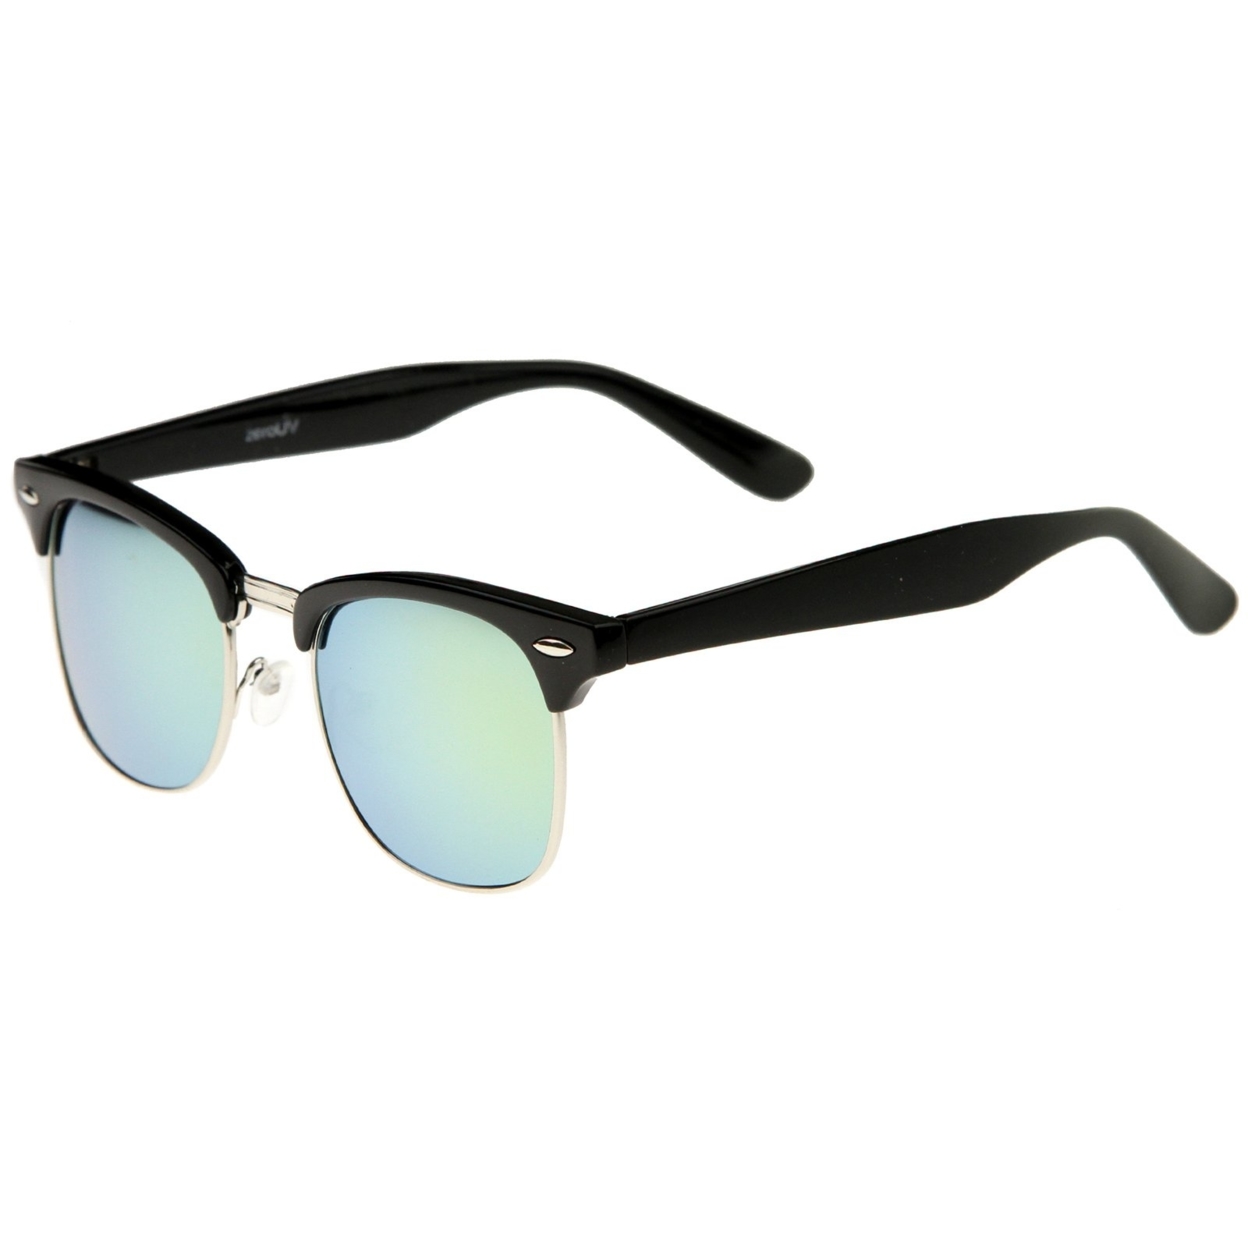 Premium Half Frame Colored Mirror Lens Horn Rimmed Sunglasses 50mm - White-Gold / Blue Mirror